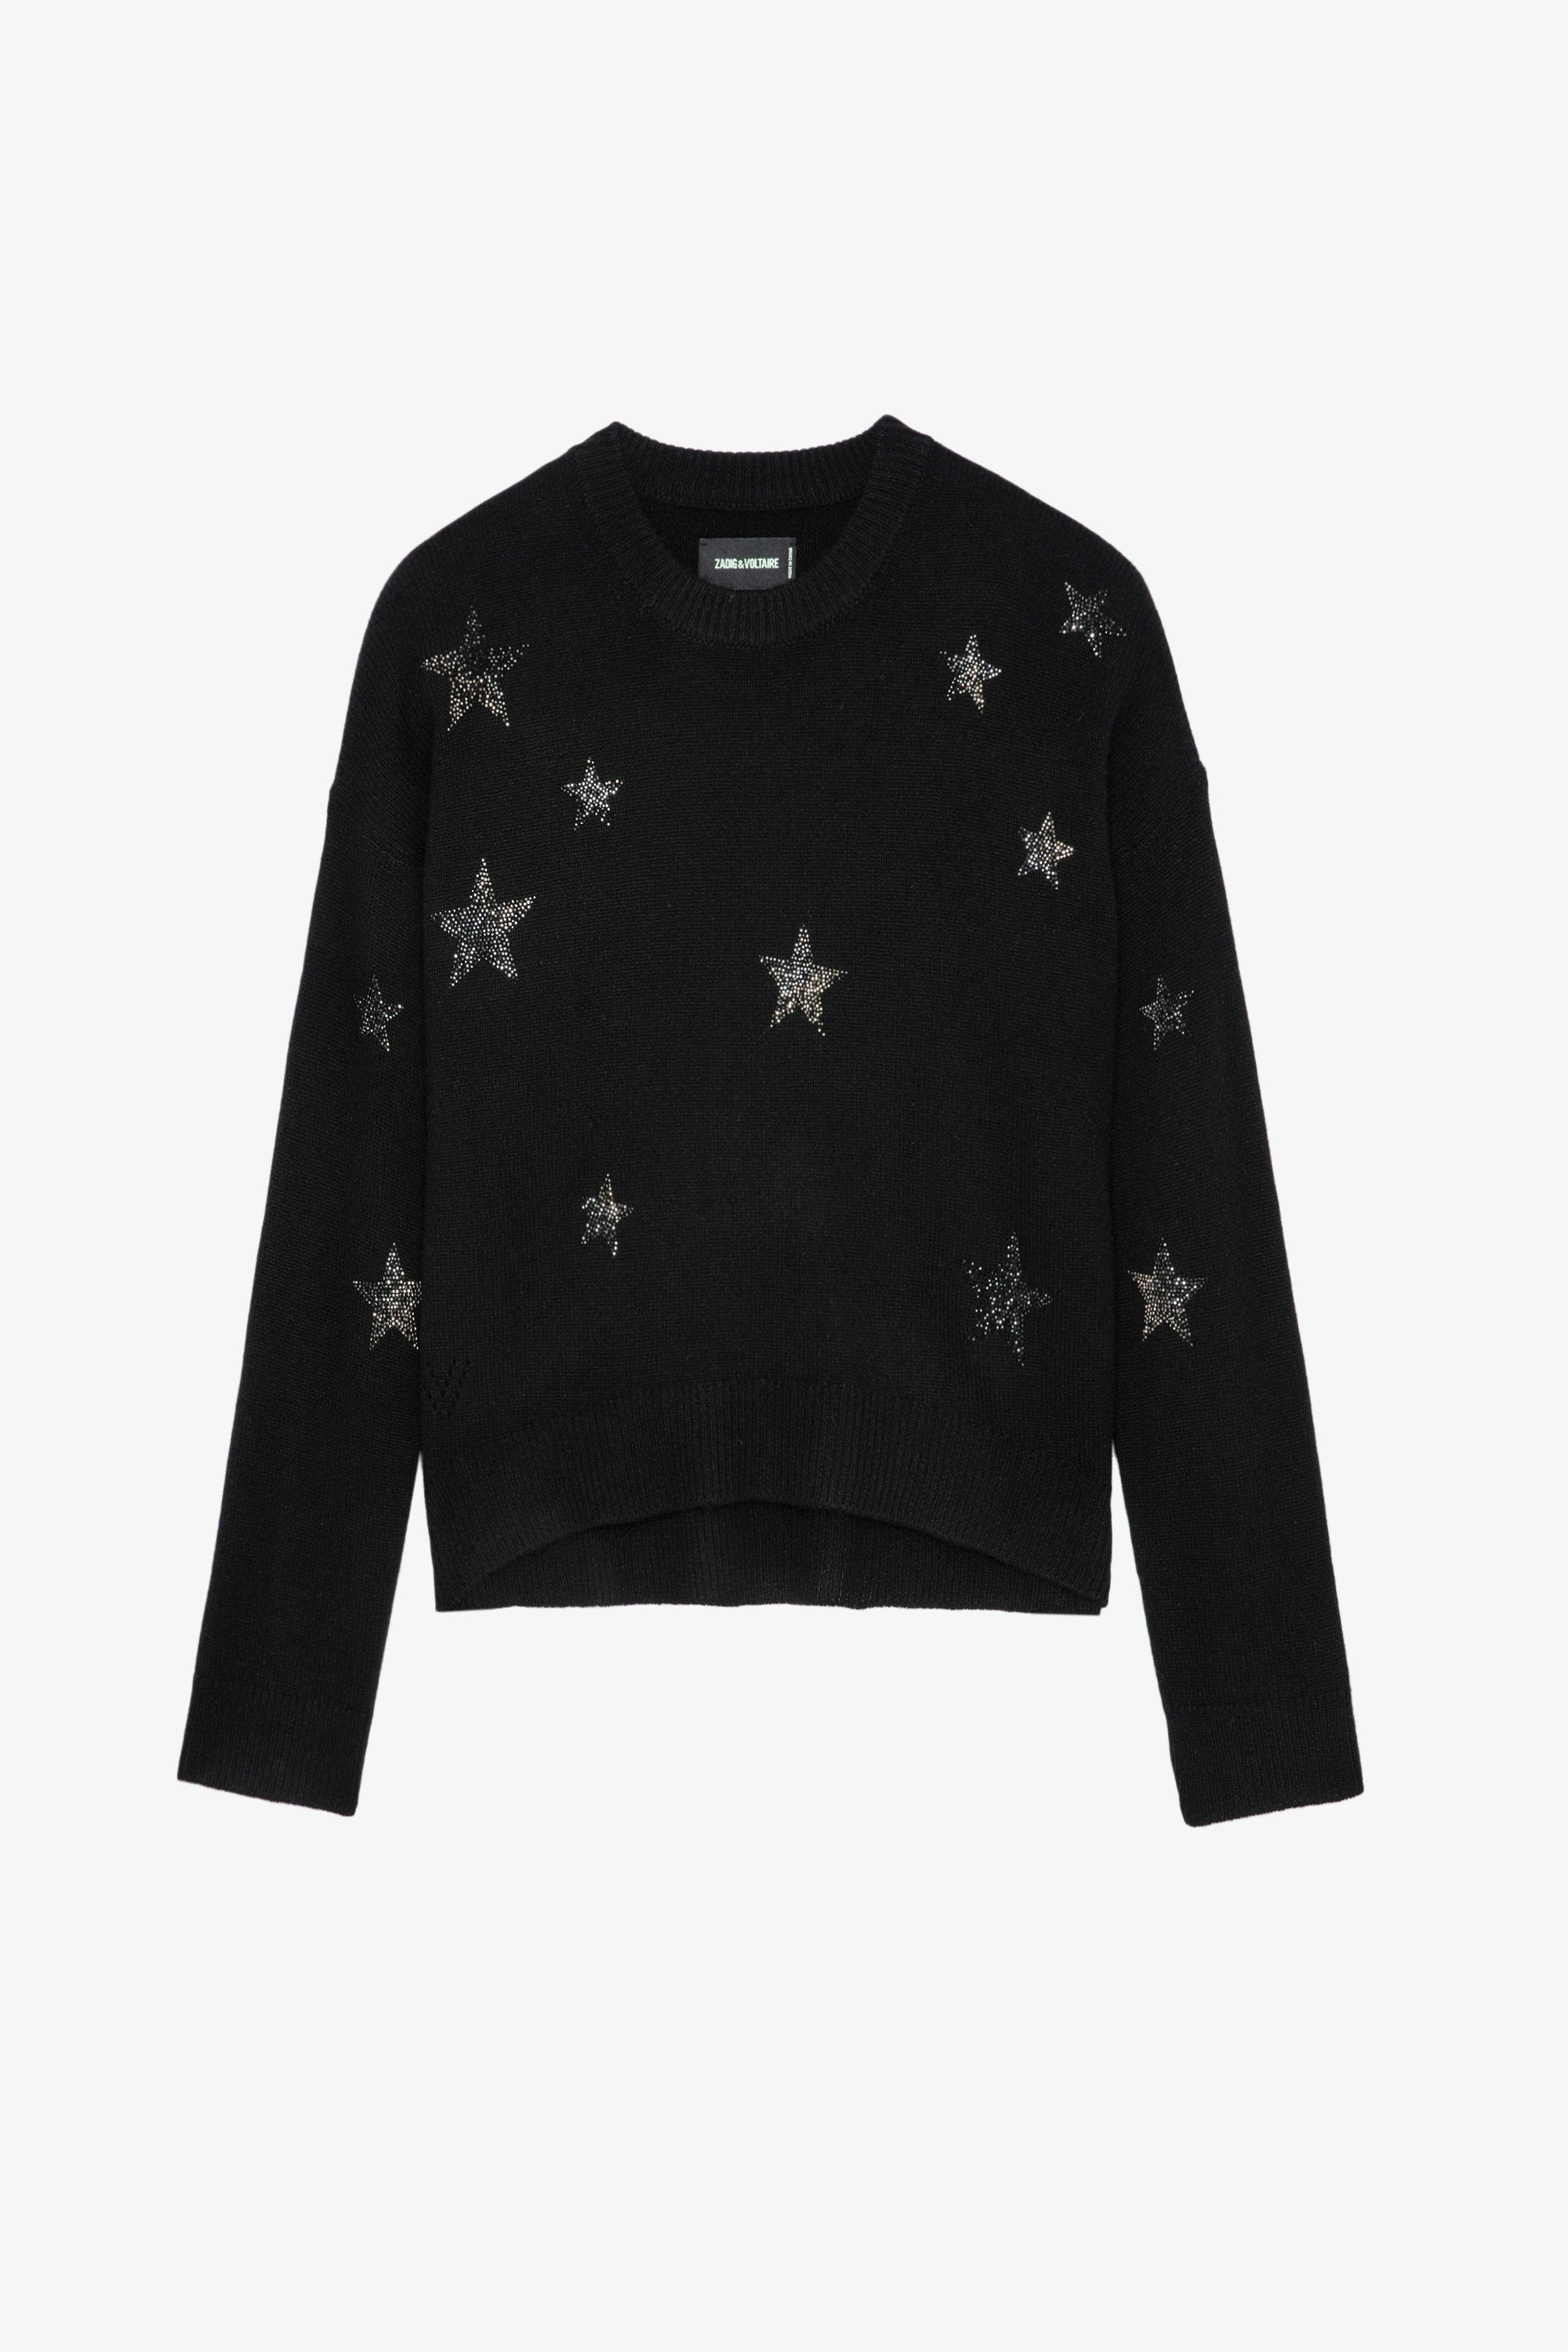 Markus Stars Cashmere Jumper Women’s black rhinestone cashmere jumper with star motifs